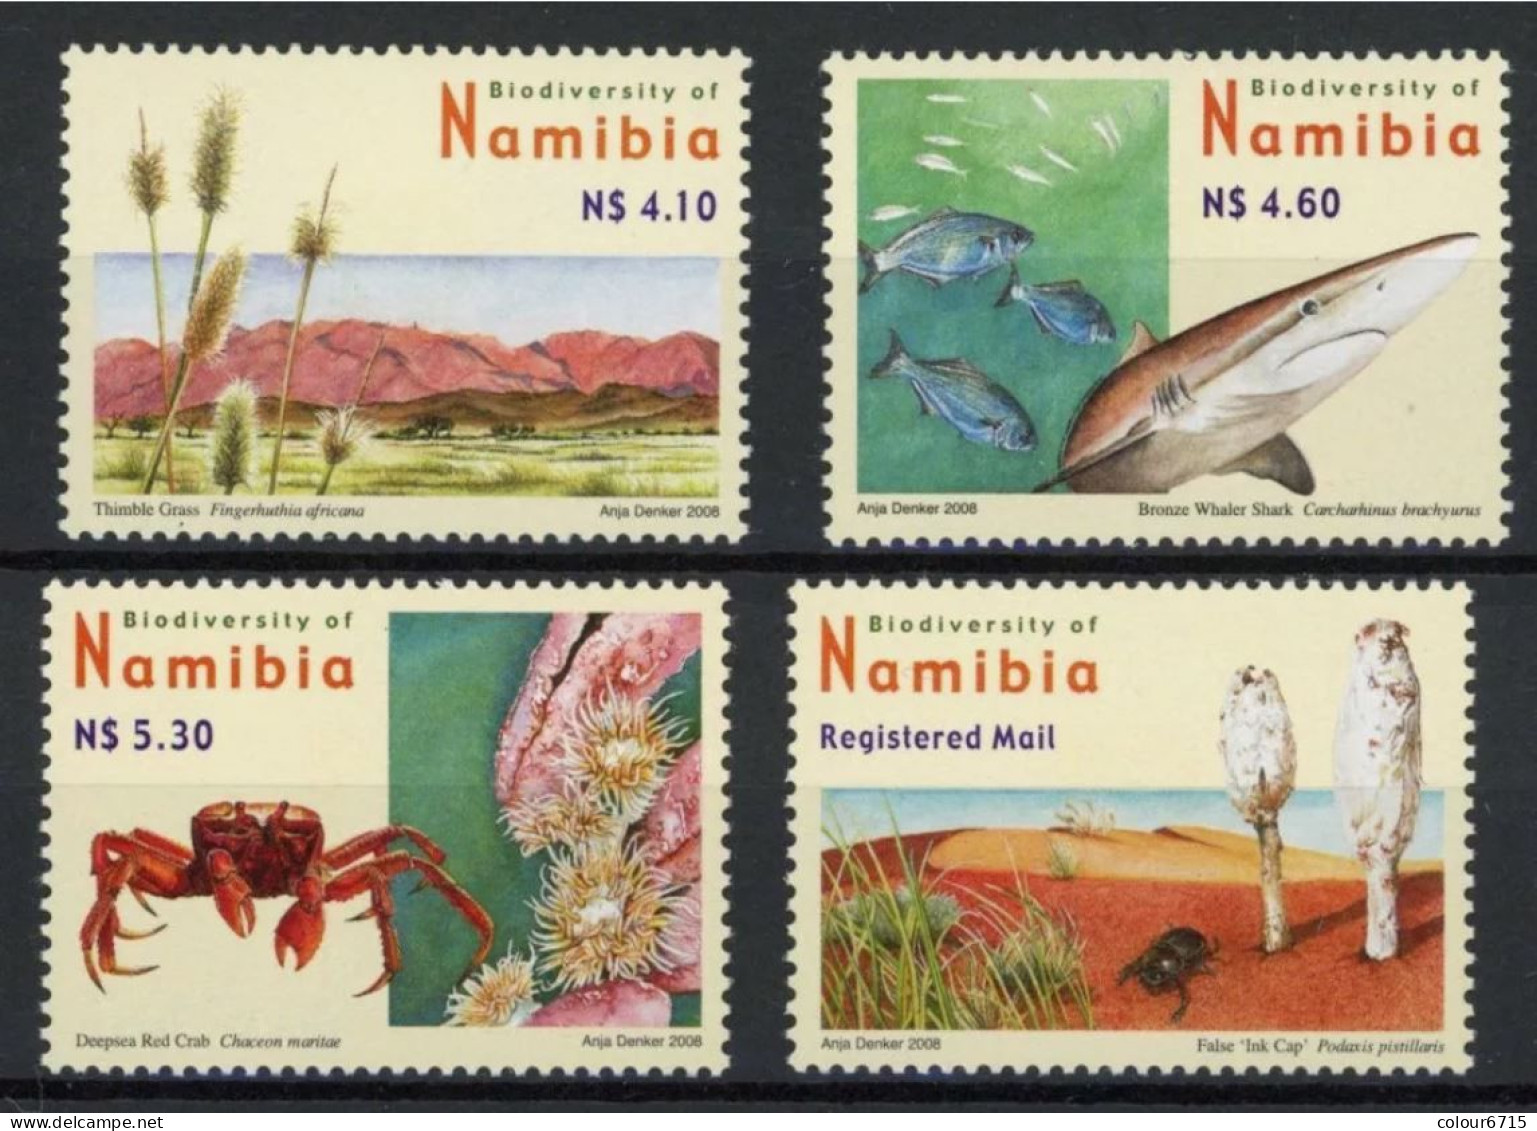 Namibia 2007/2008 Flora And Fauna - Biodiversity Of Namibia Stamps 16v MNH - Namibie (1990- ...)